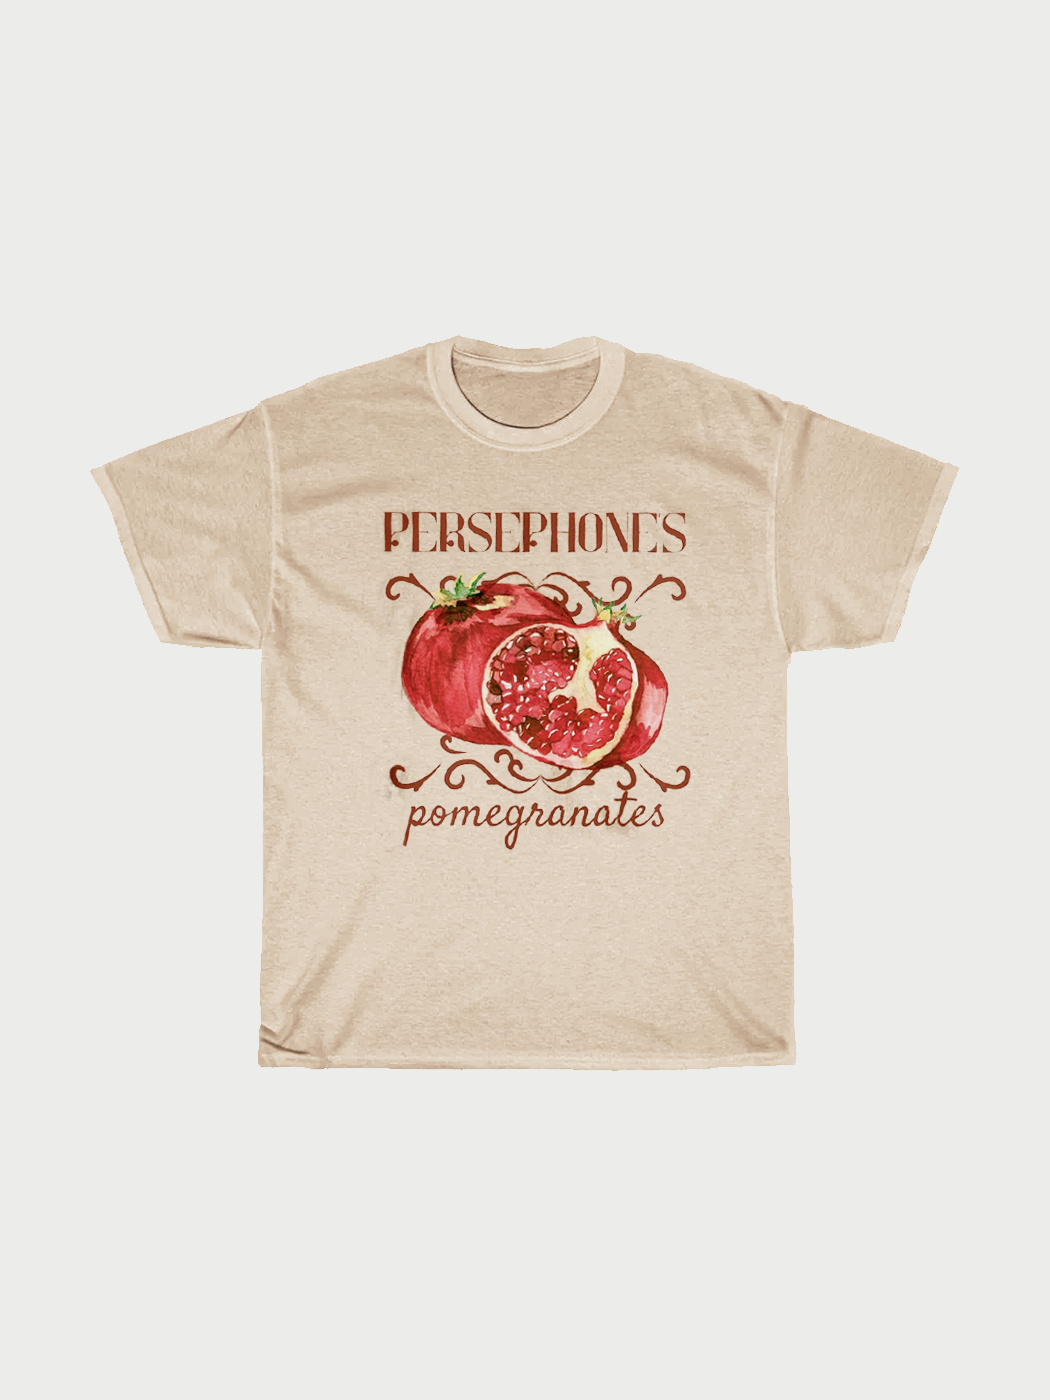 Greek Mythology Persephone Printed T-shirt / DarkAcademias /Darkacademias